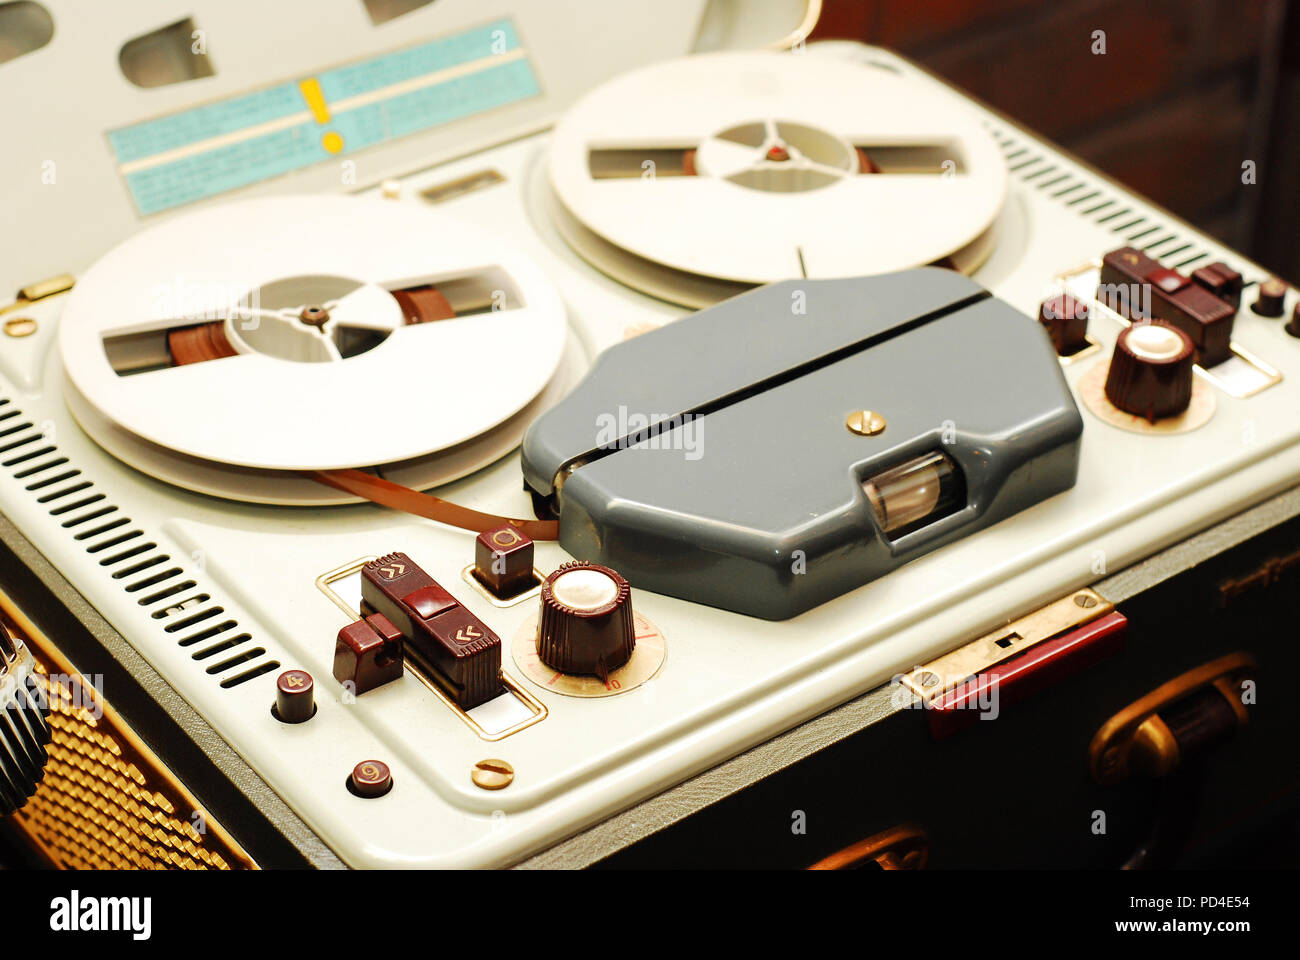 Old vintage reel tape recorder Stock Photo - Alamy